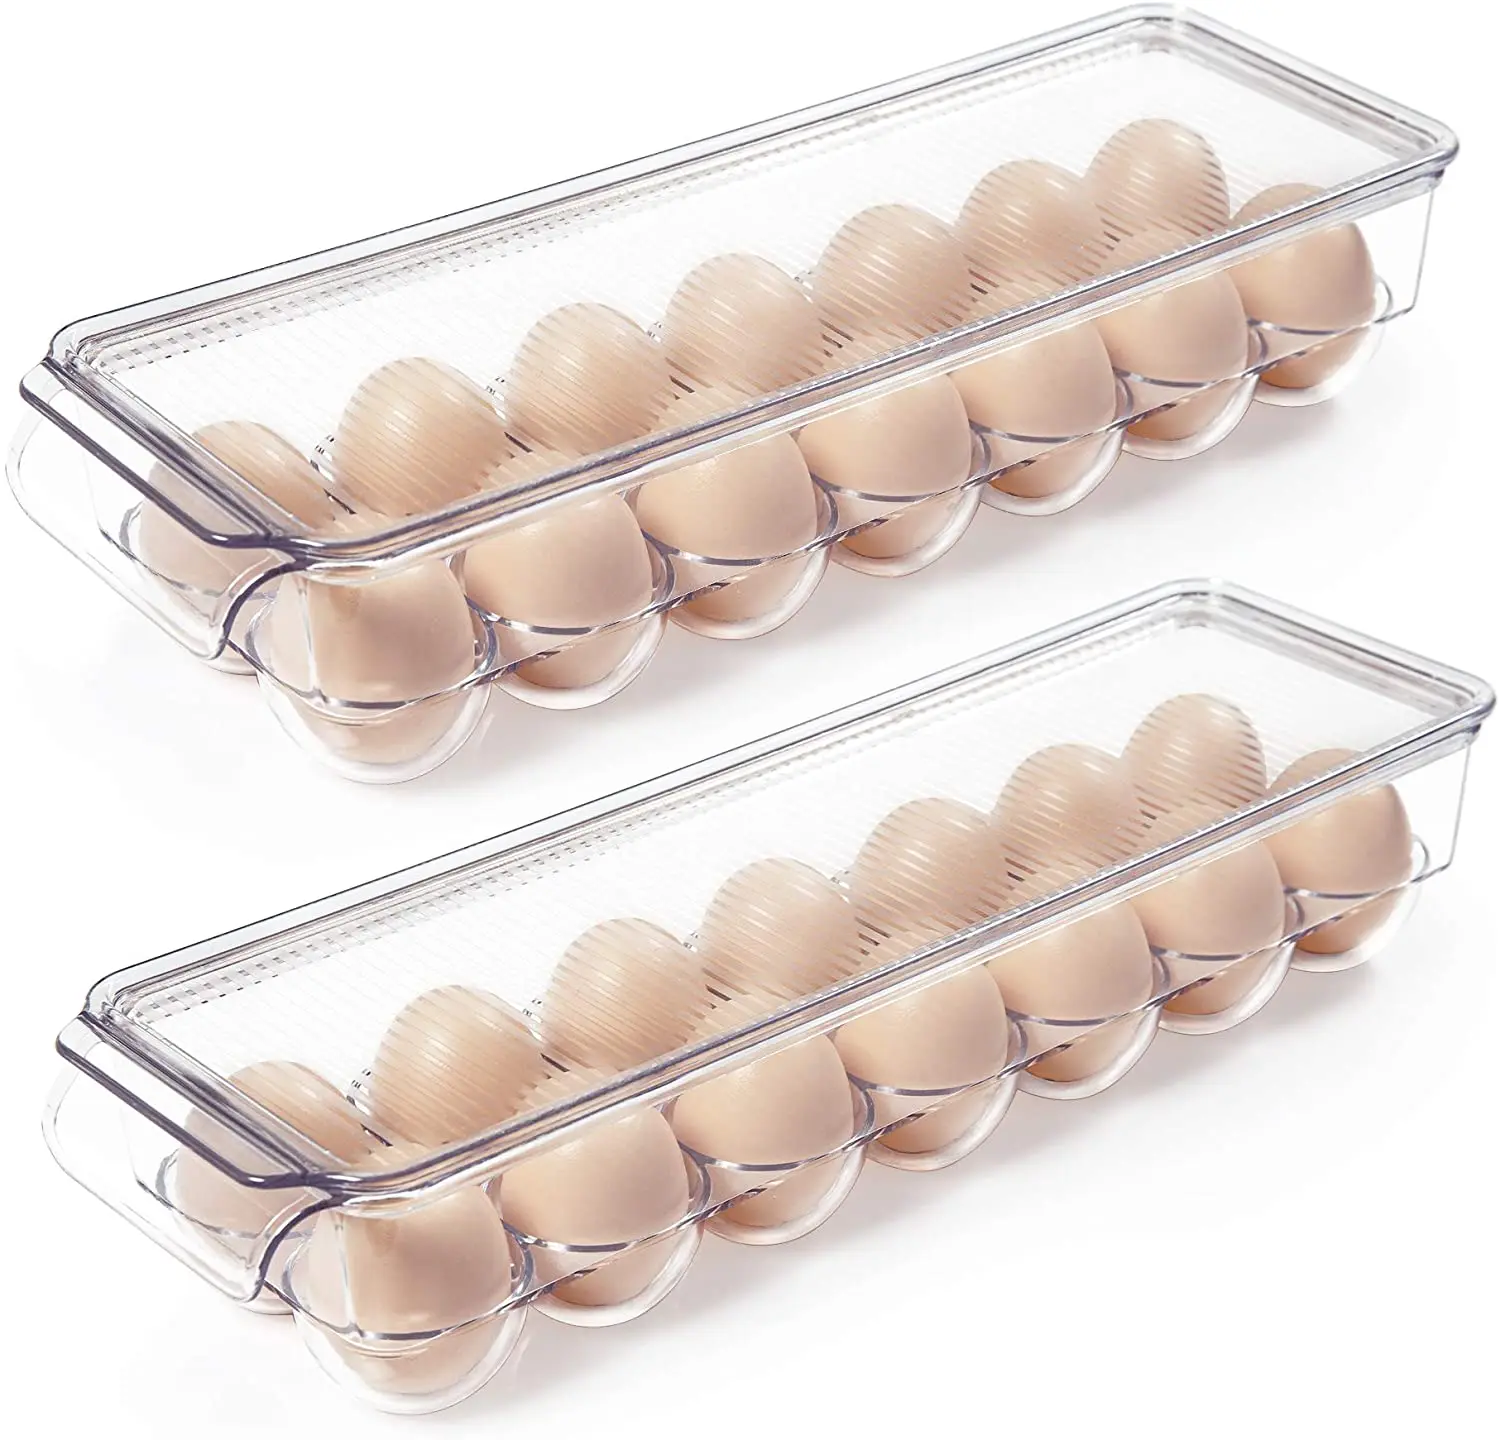 plastic egg storage container refrigerator remove